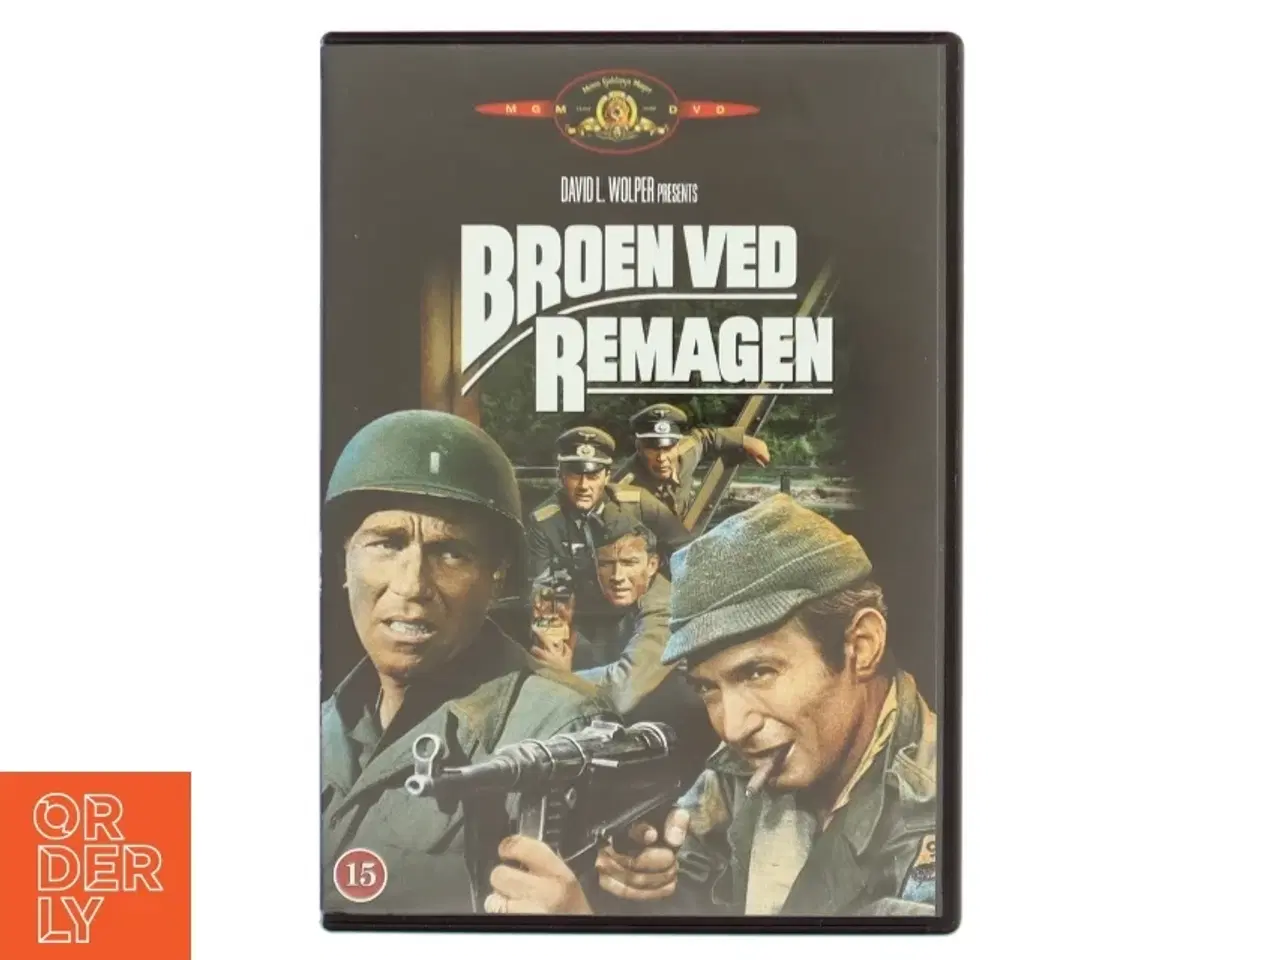 Billede 1 - DVD film 'Broen ved Remagen'